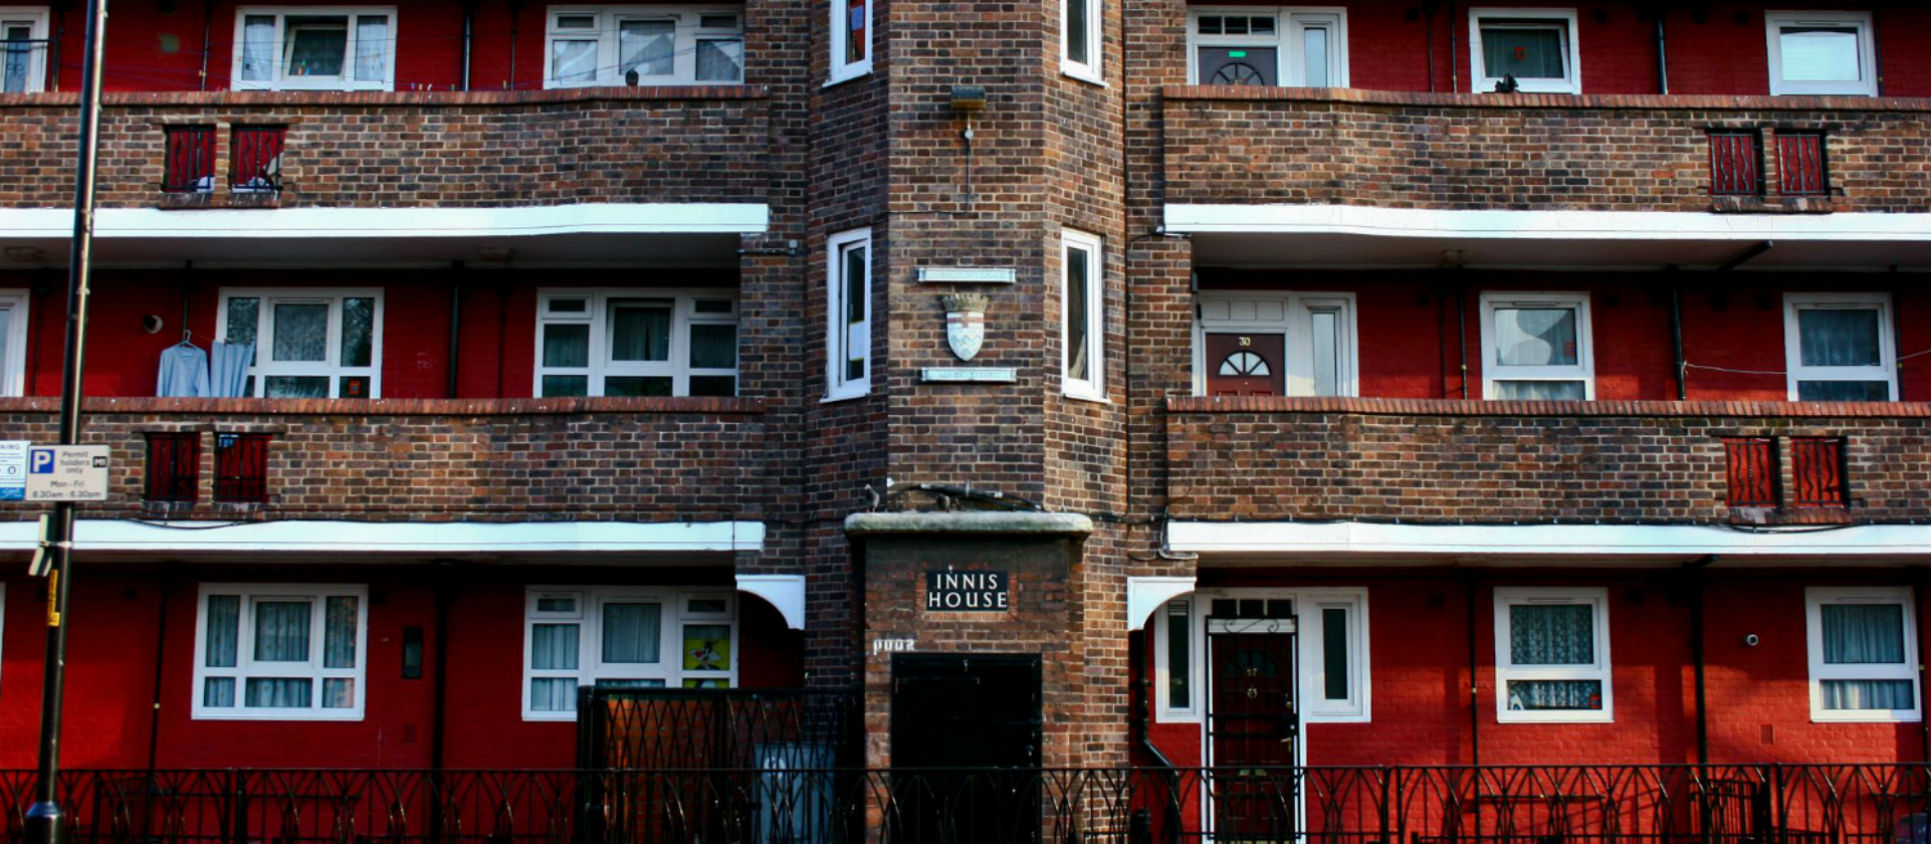 Housing estate in London.